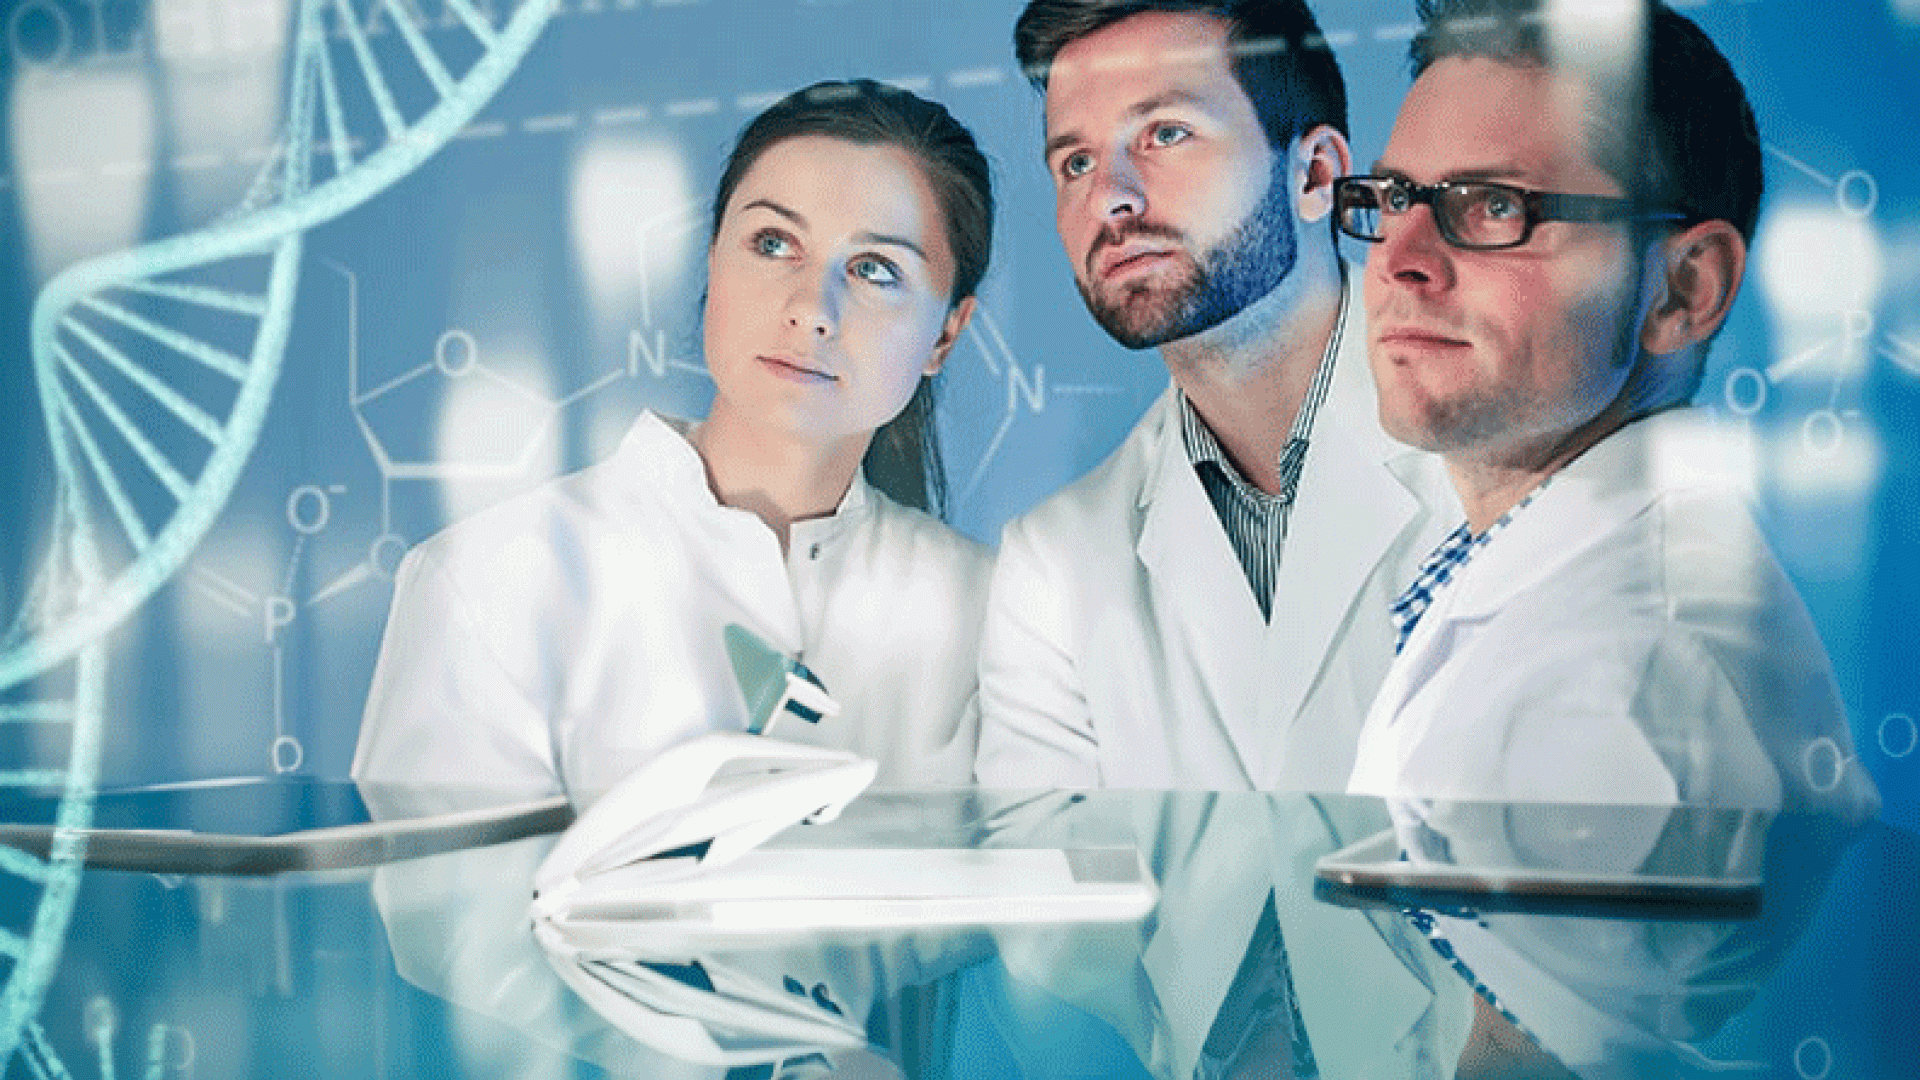 Three scientists gazing at a DNA model